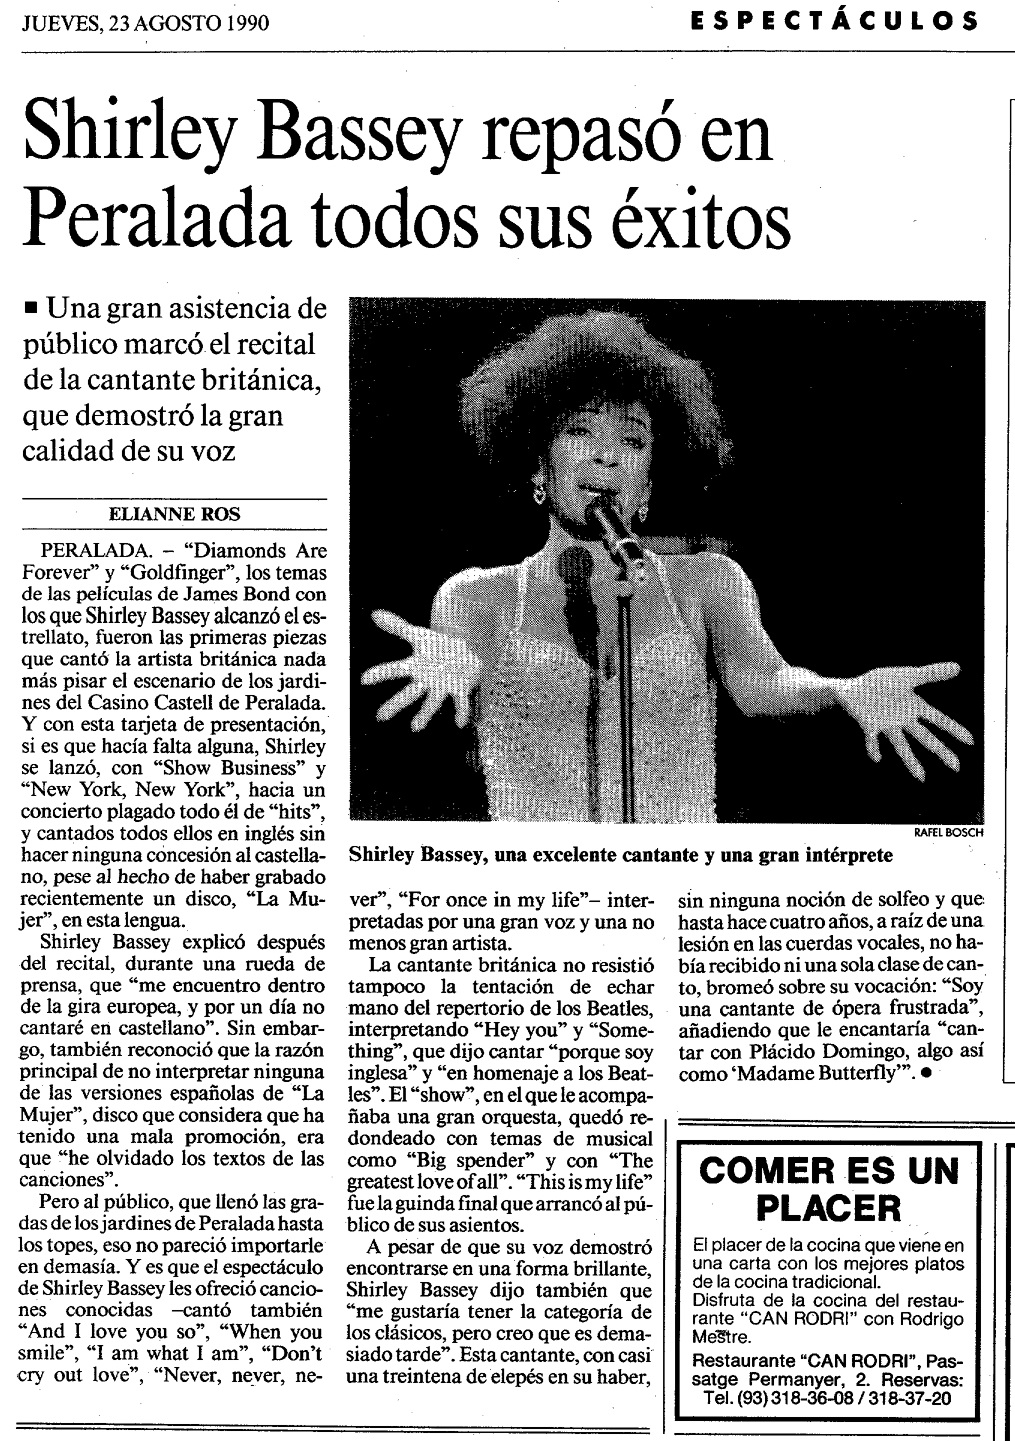 Musica 1990 08 23 La Vanguardia Barcelona 027 Shirley Bassey Perlada